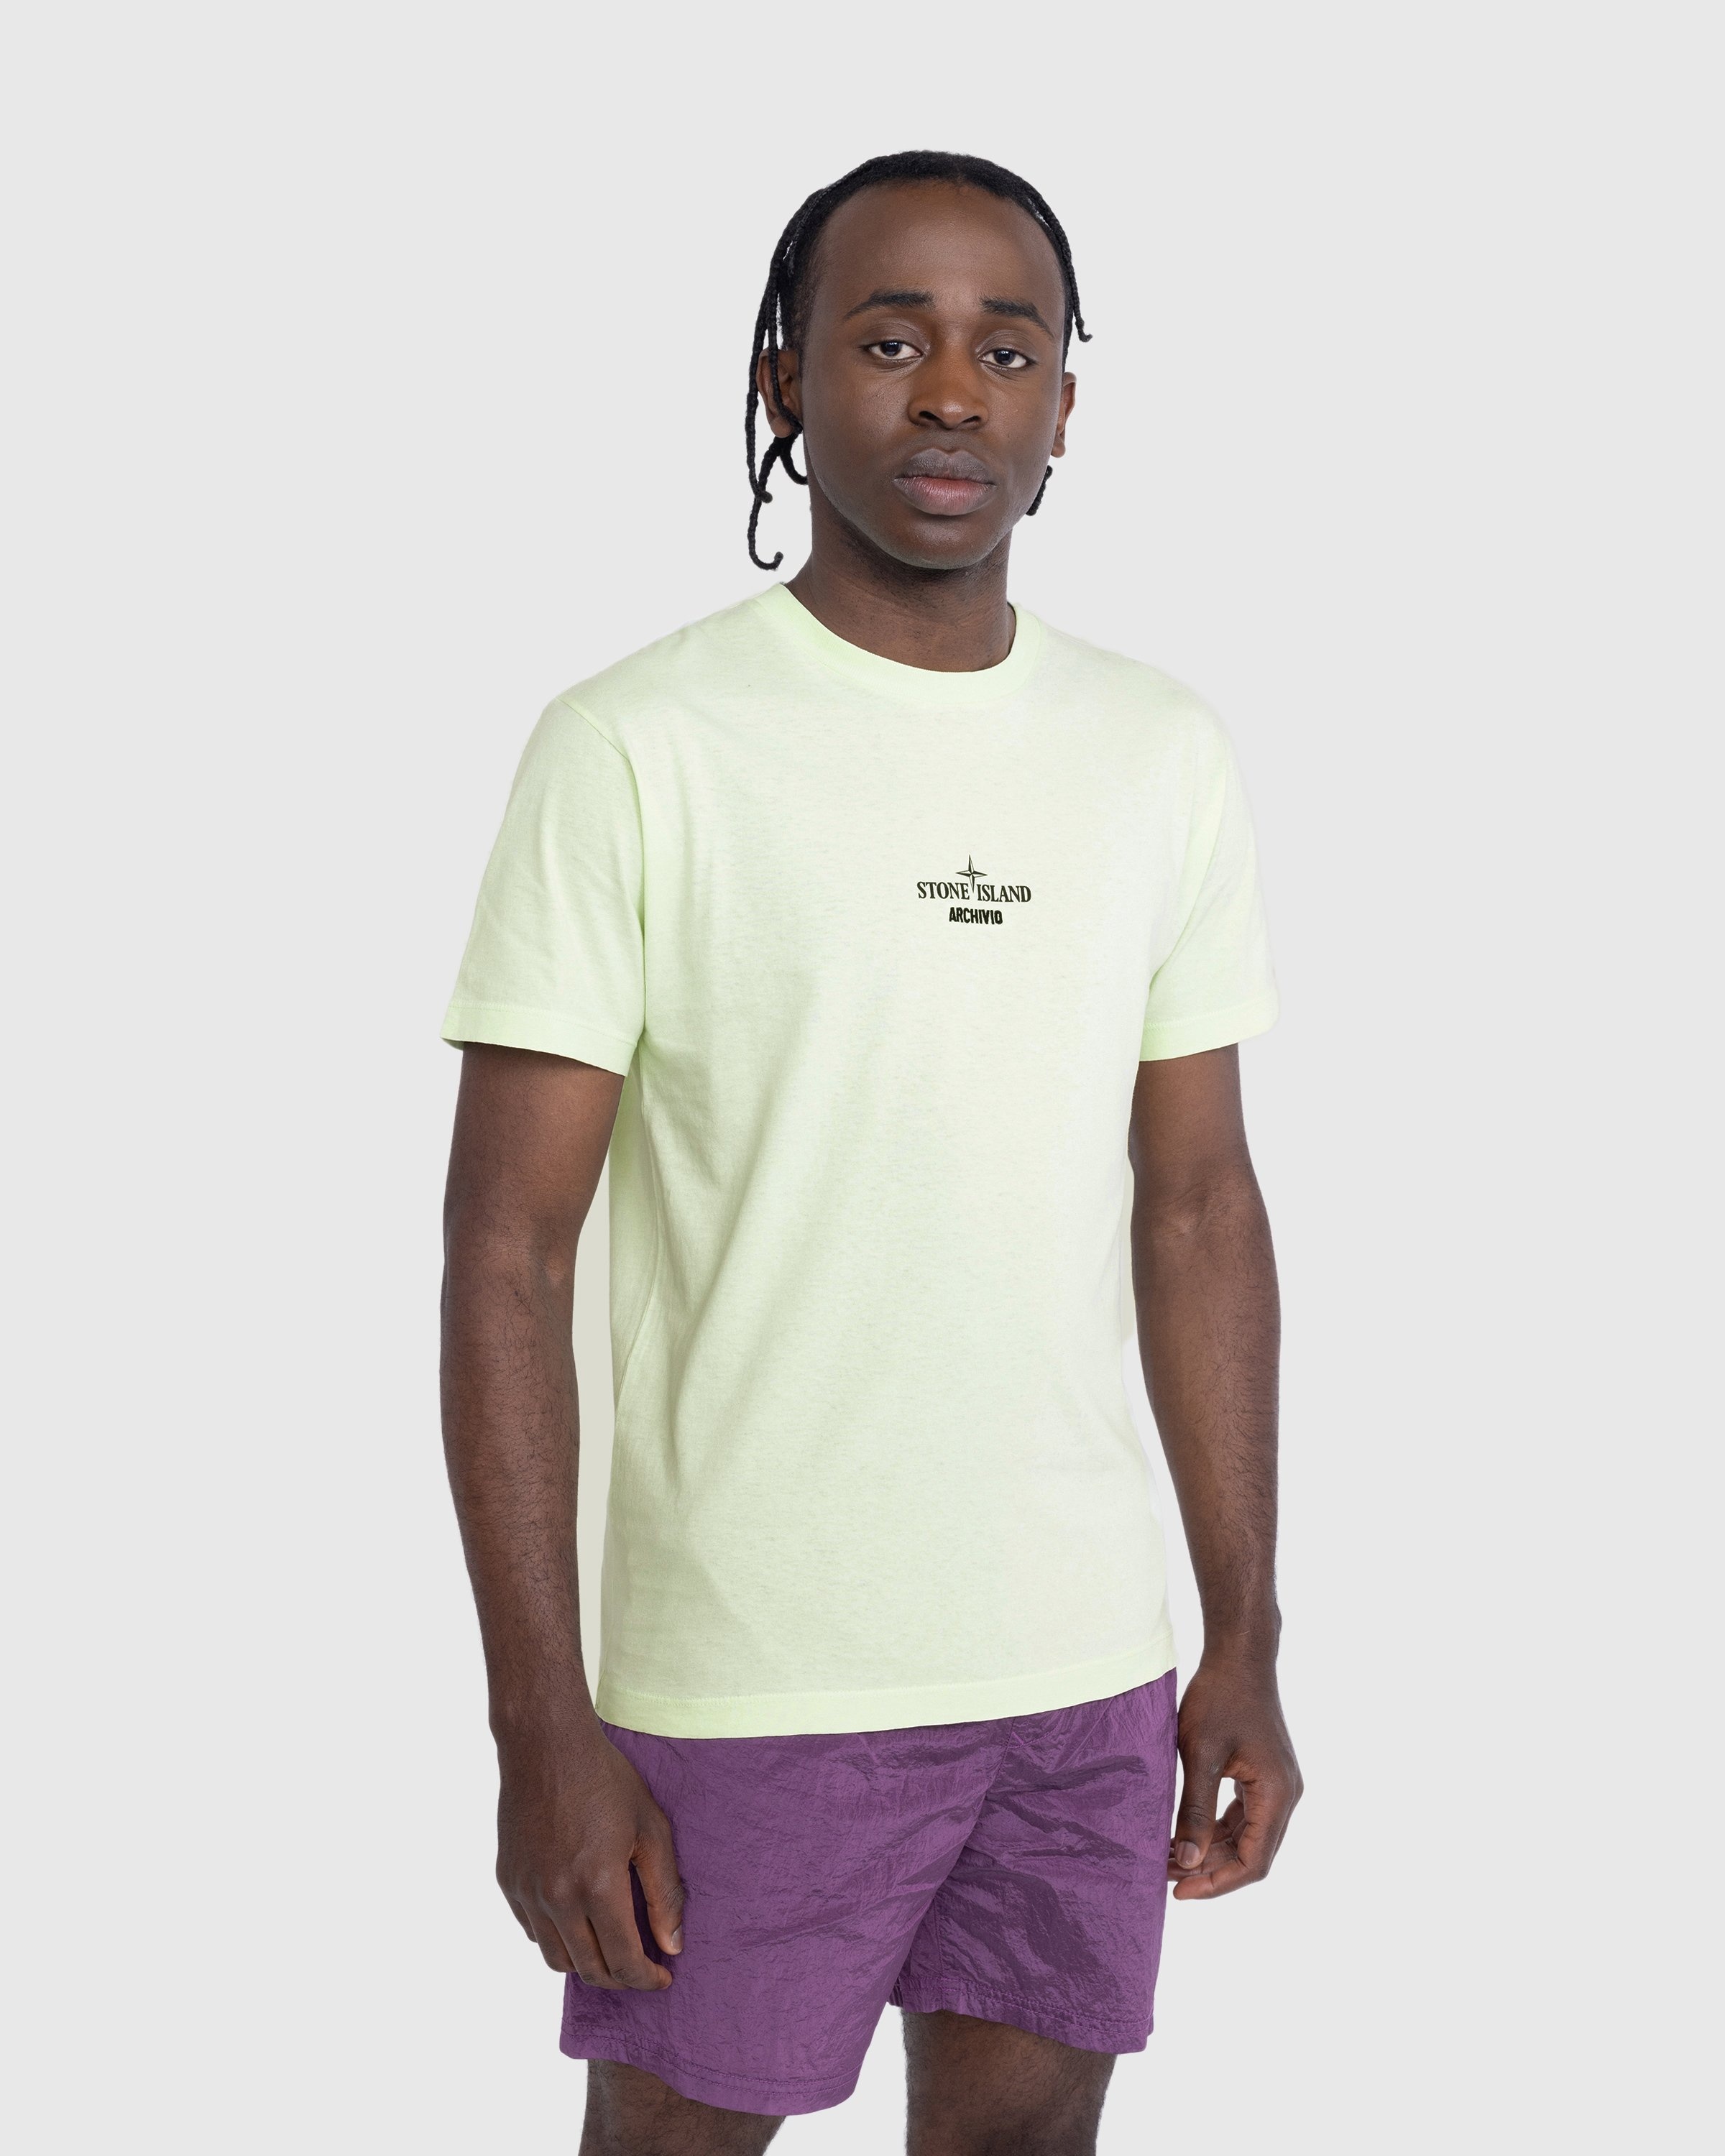 Stone Island – T-Shirt 2NS91 | Green Highsnobiety Shop